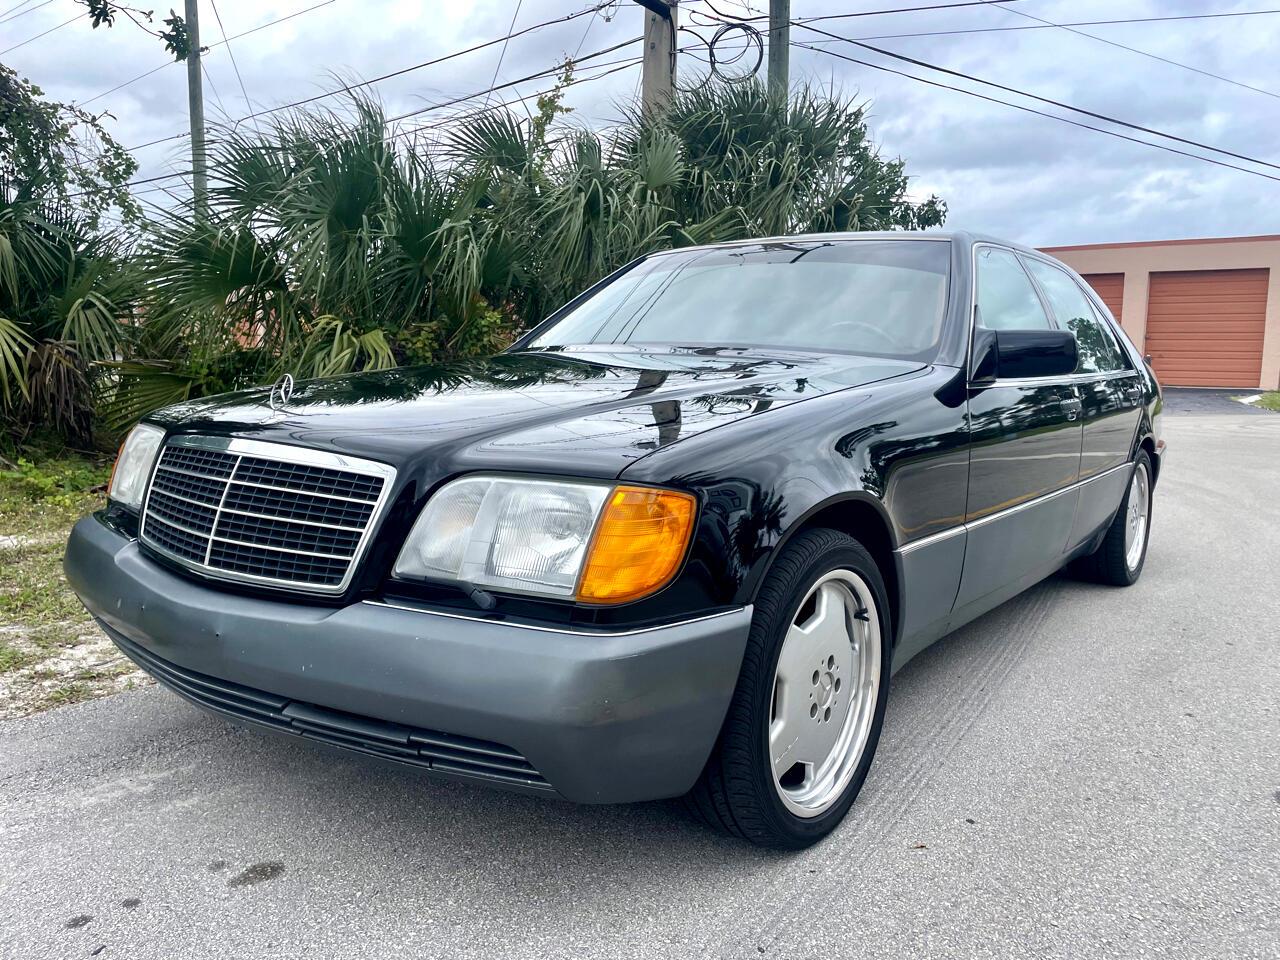 For Sale: 1992 Mercedes-Benz 500 in Pompano Beach, Florida for sale in Pompano Beach, FL